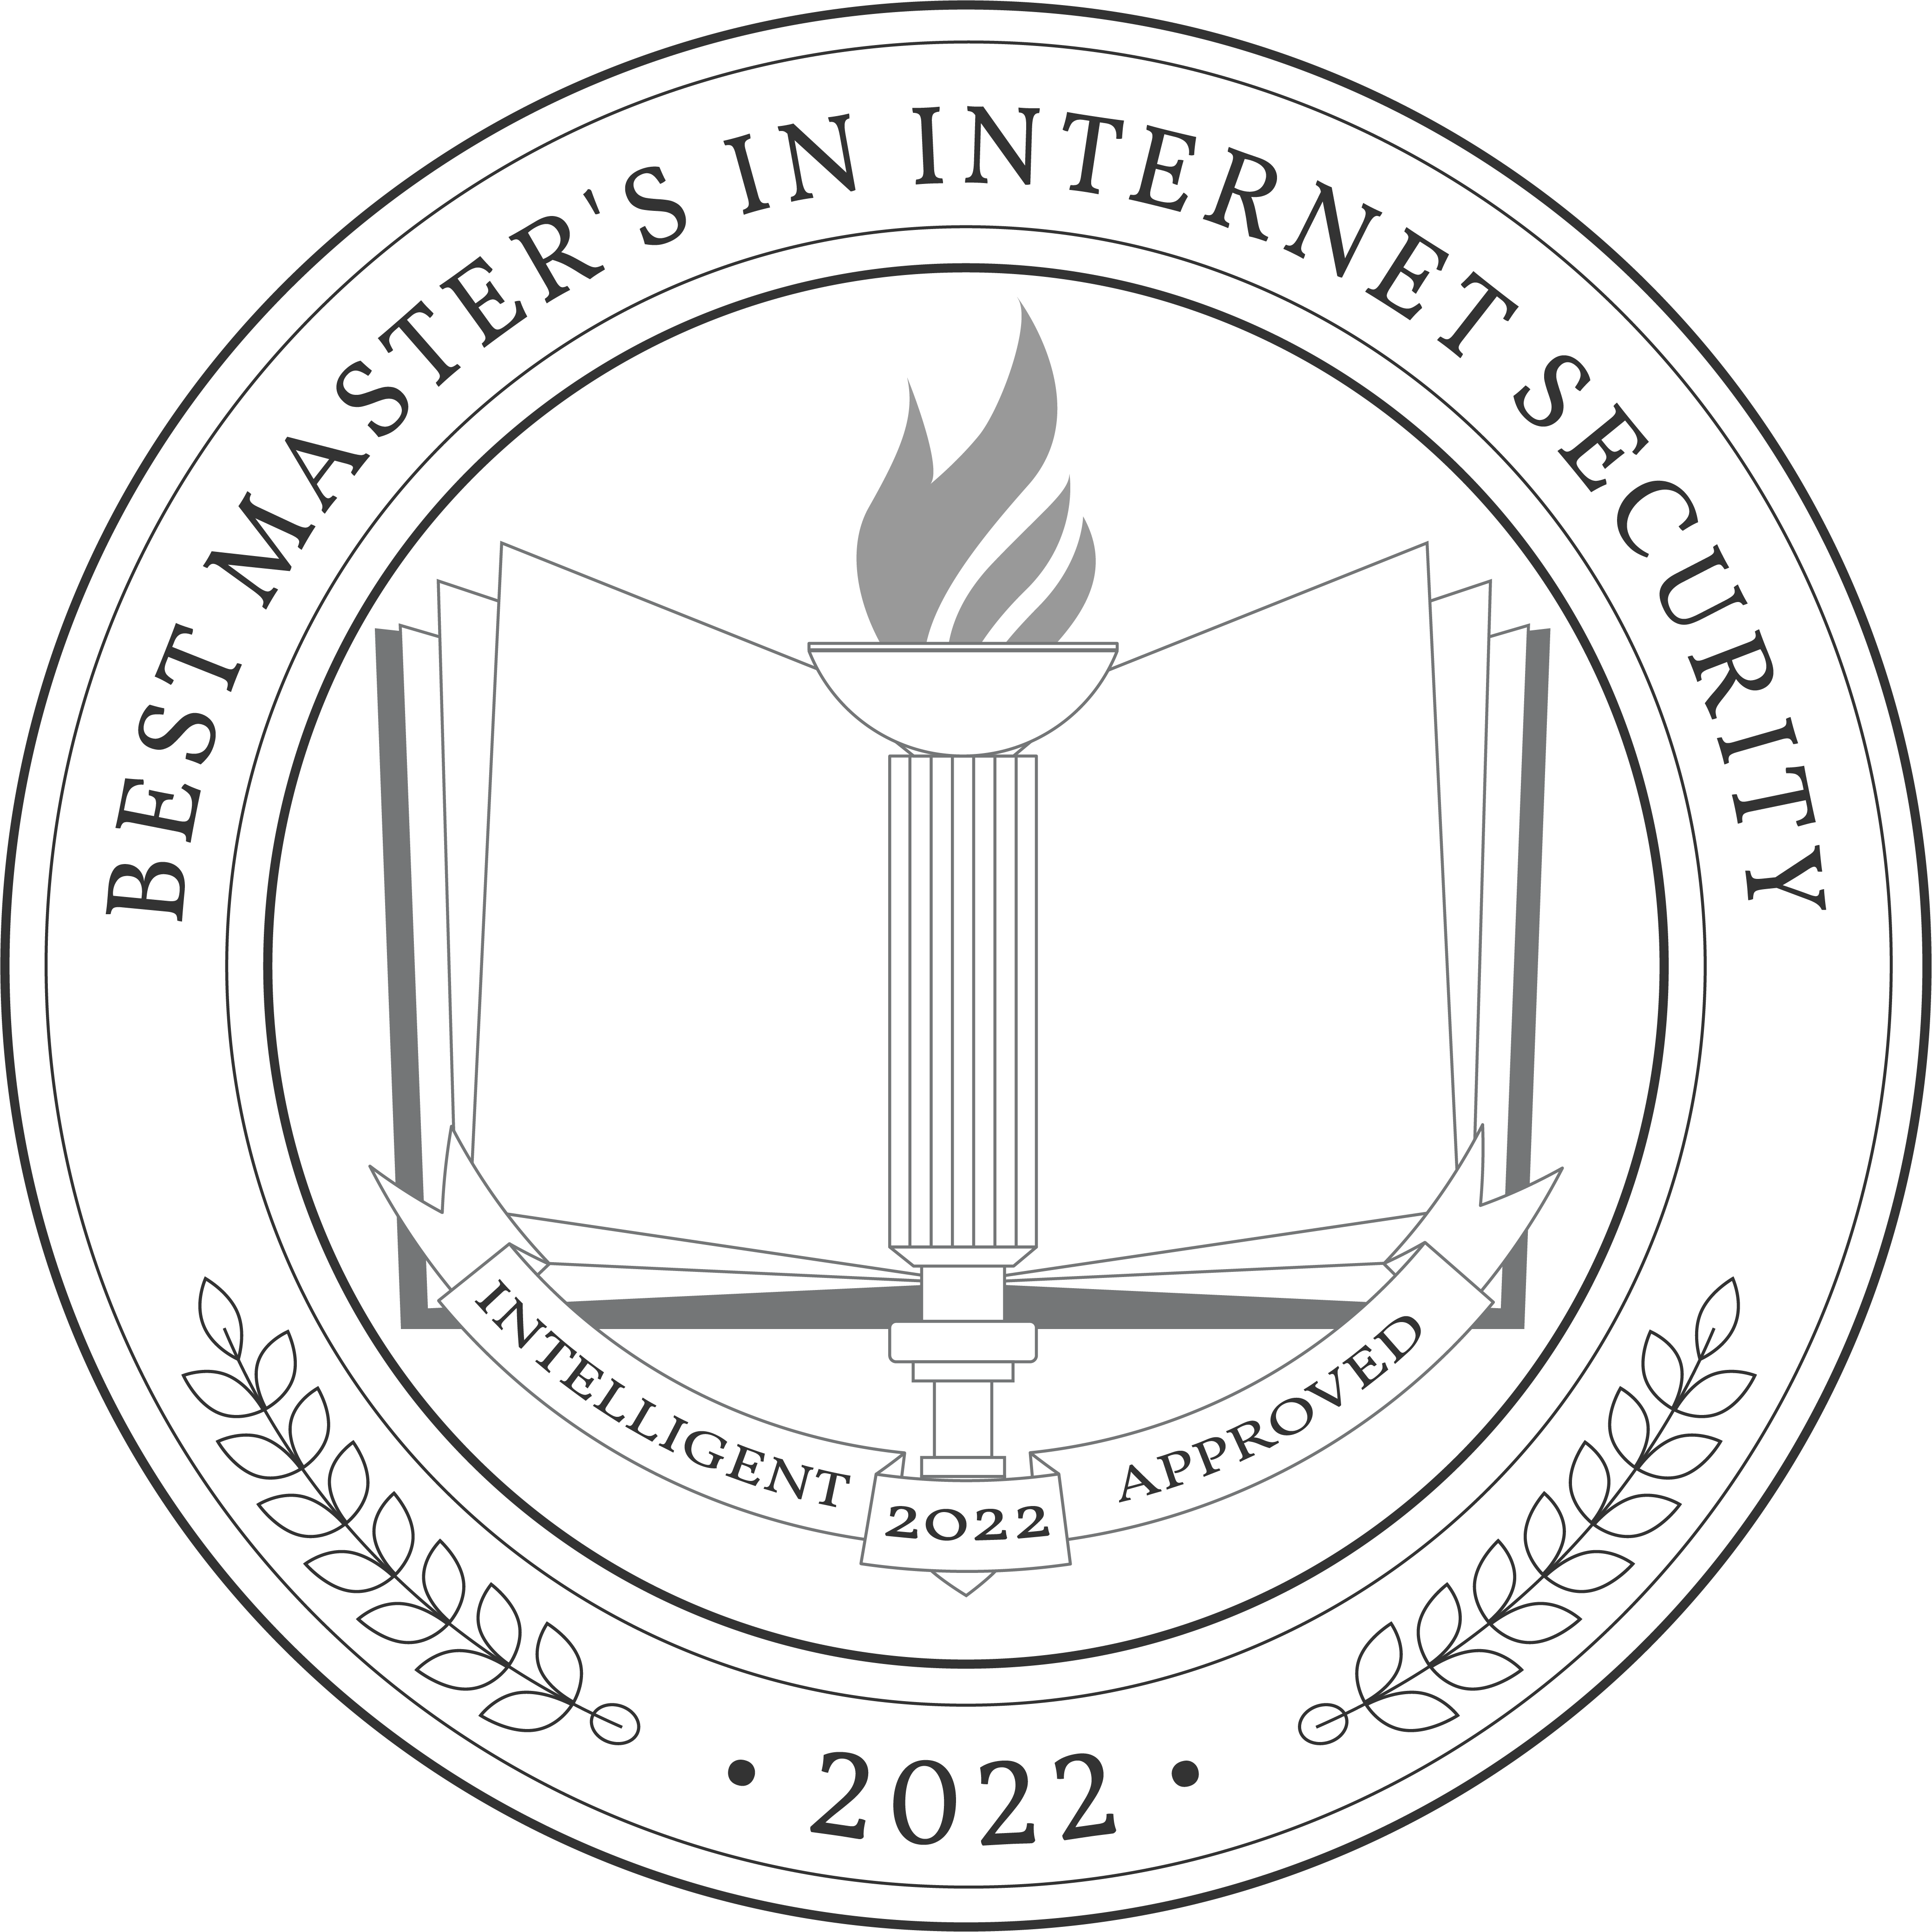 Best Master's in Internet Security Badge